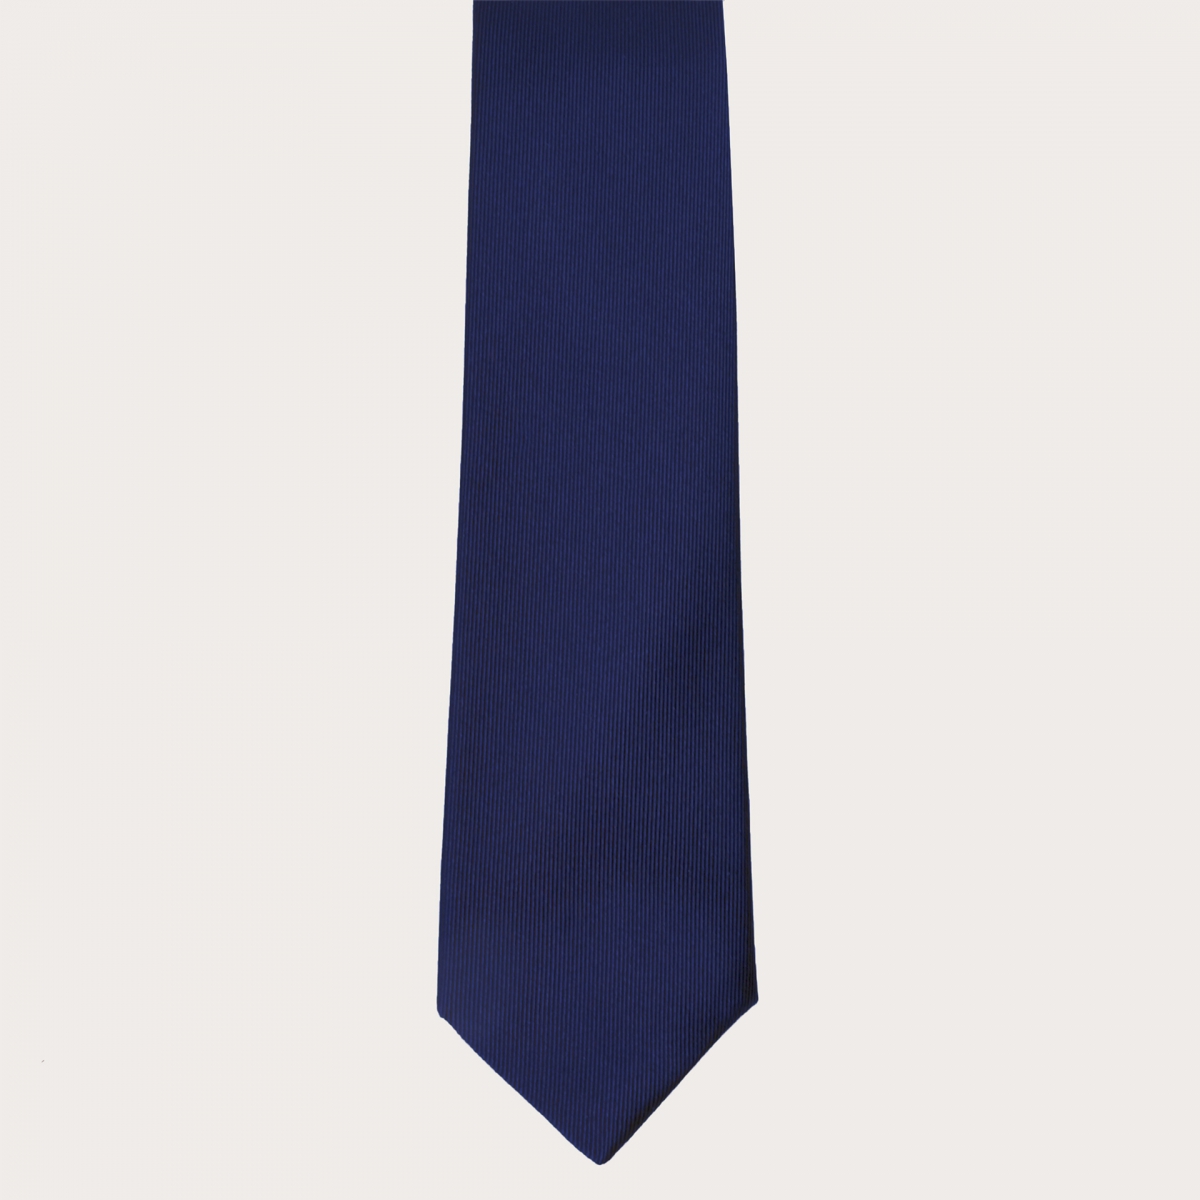 BRUCLE Passende Hosenträger und Krawatte aus Jacquard-Seide, blau